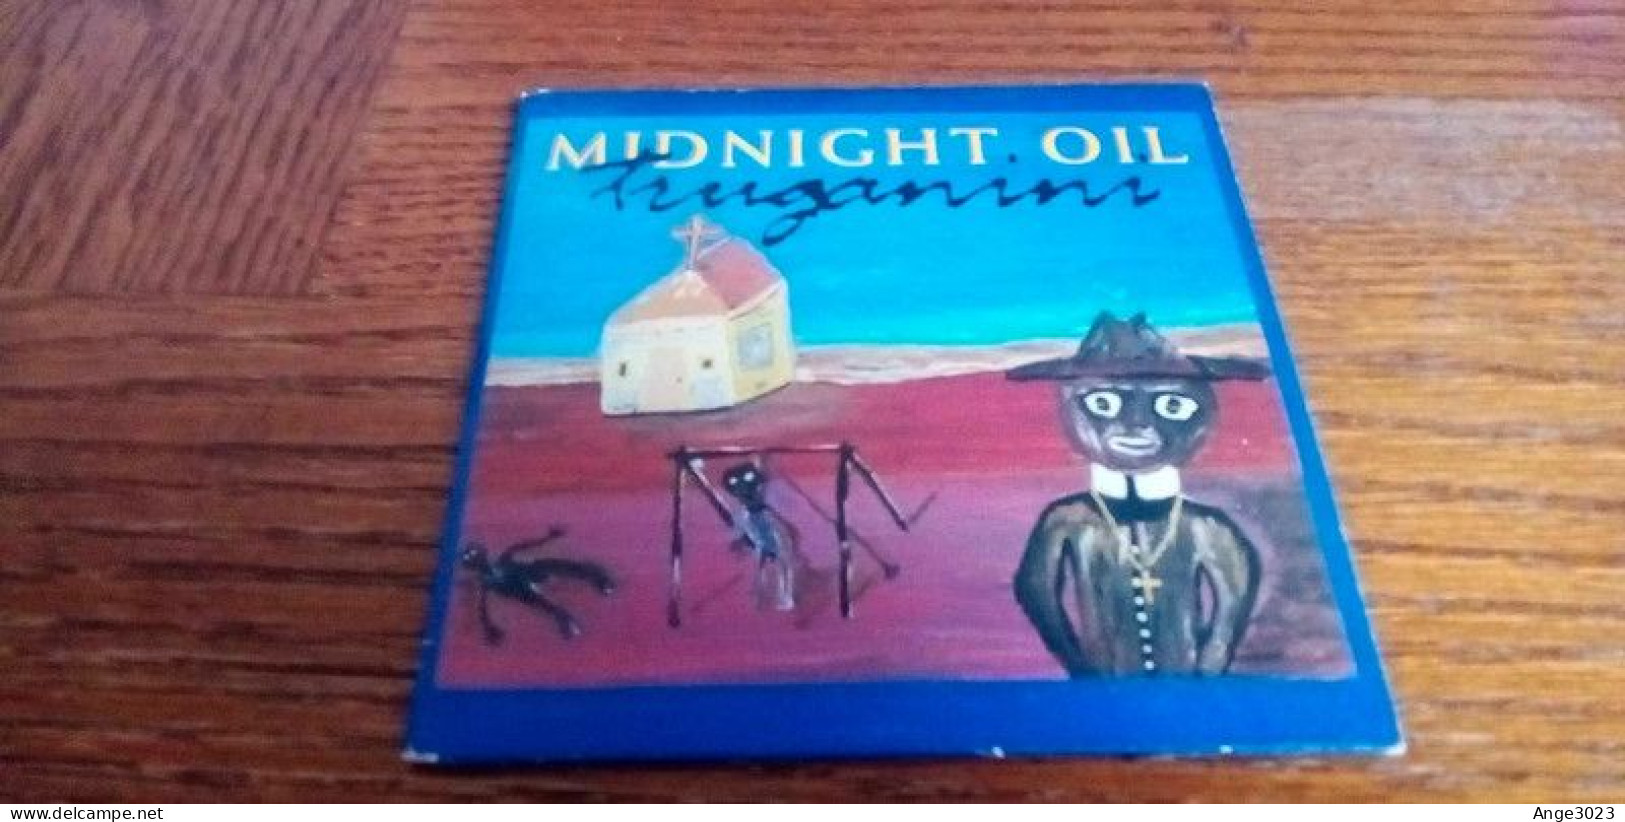 MIDNIGHT OIL "Truganini" - Rock